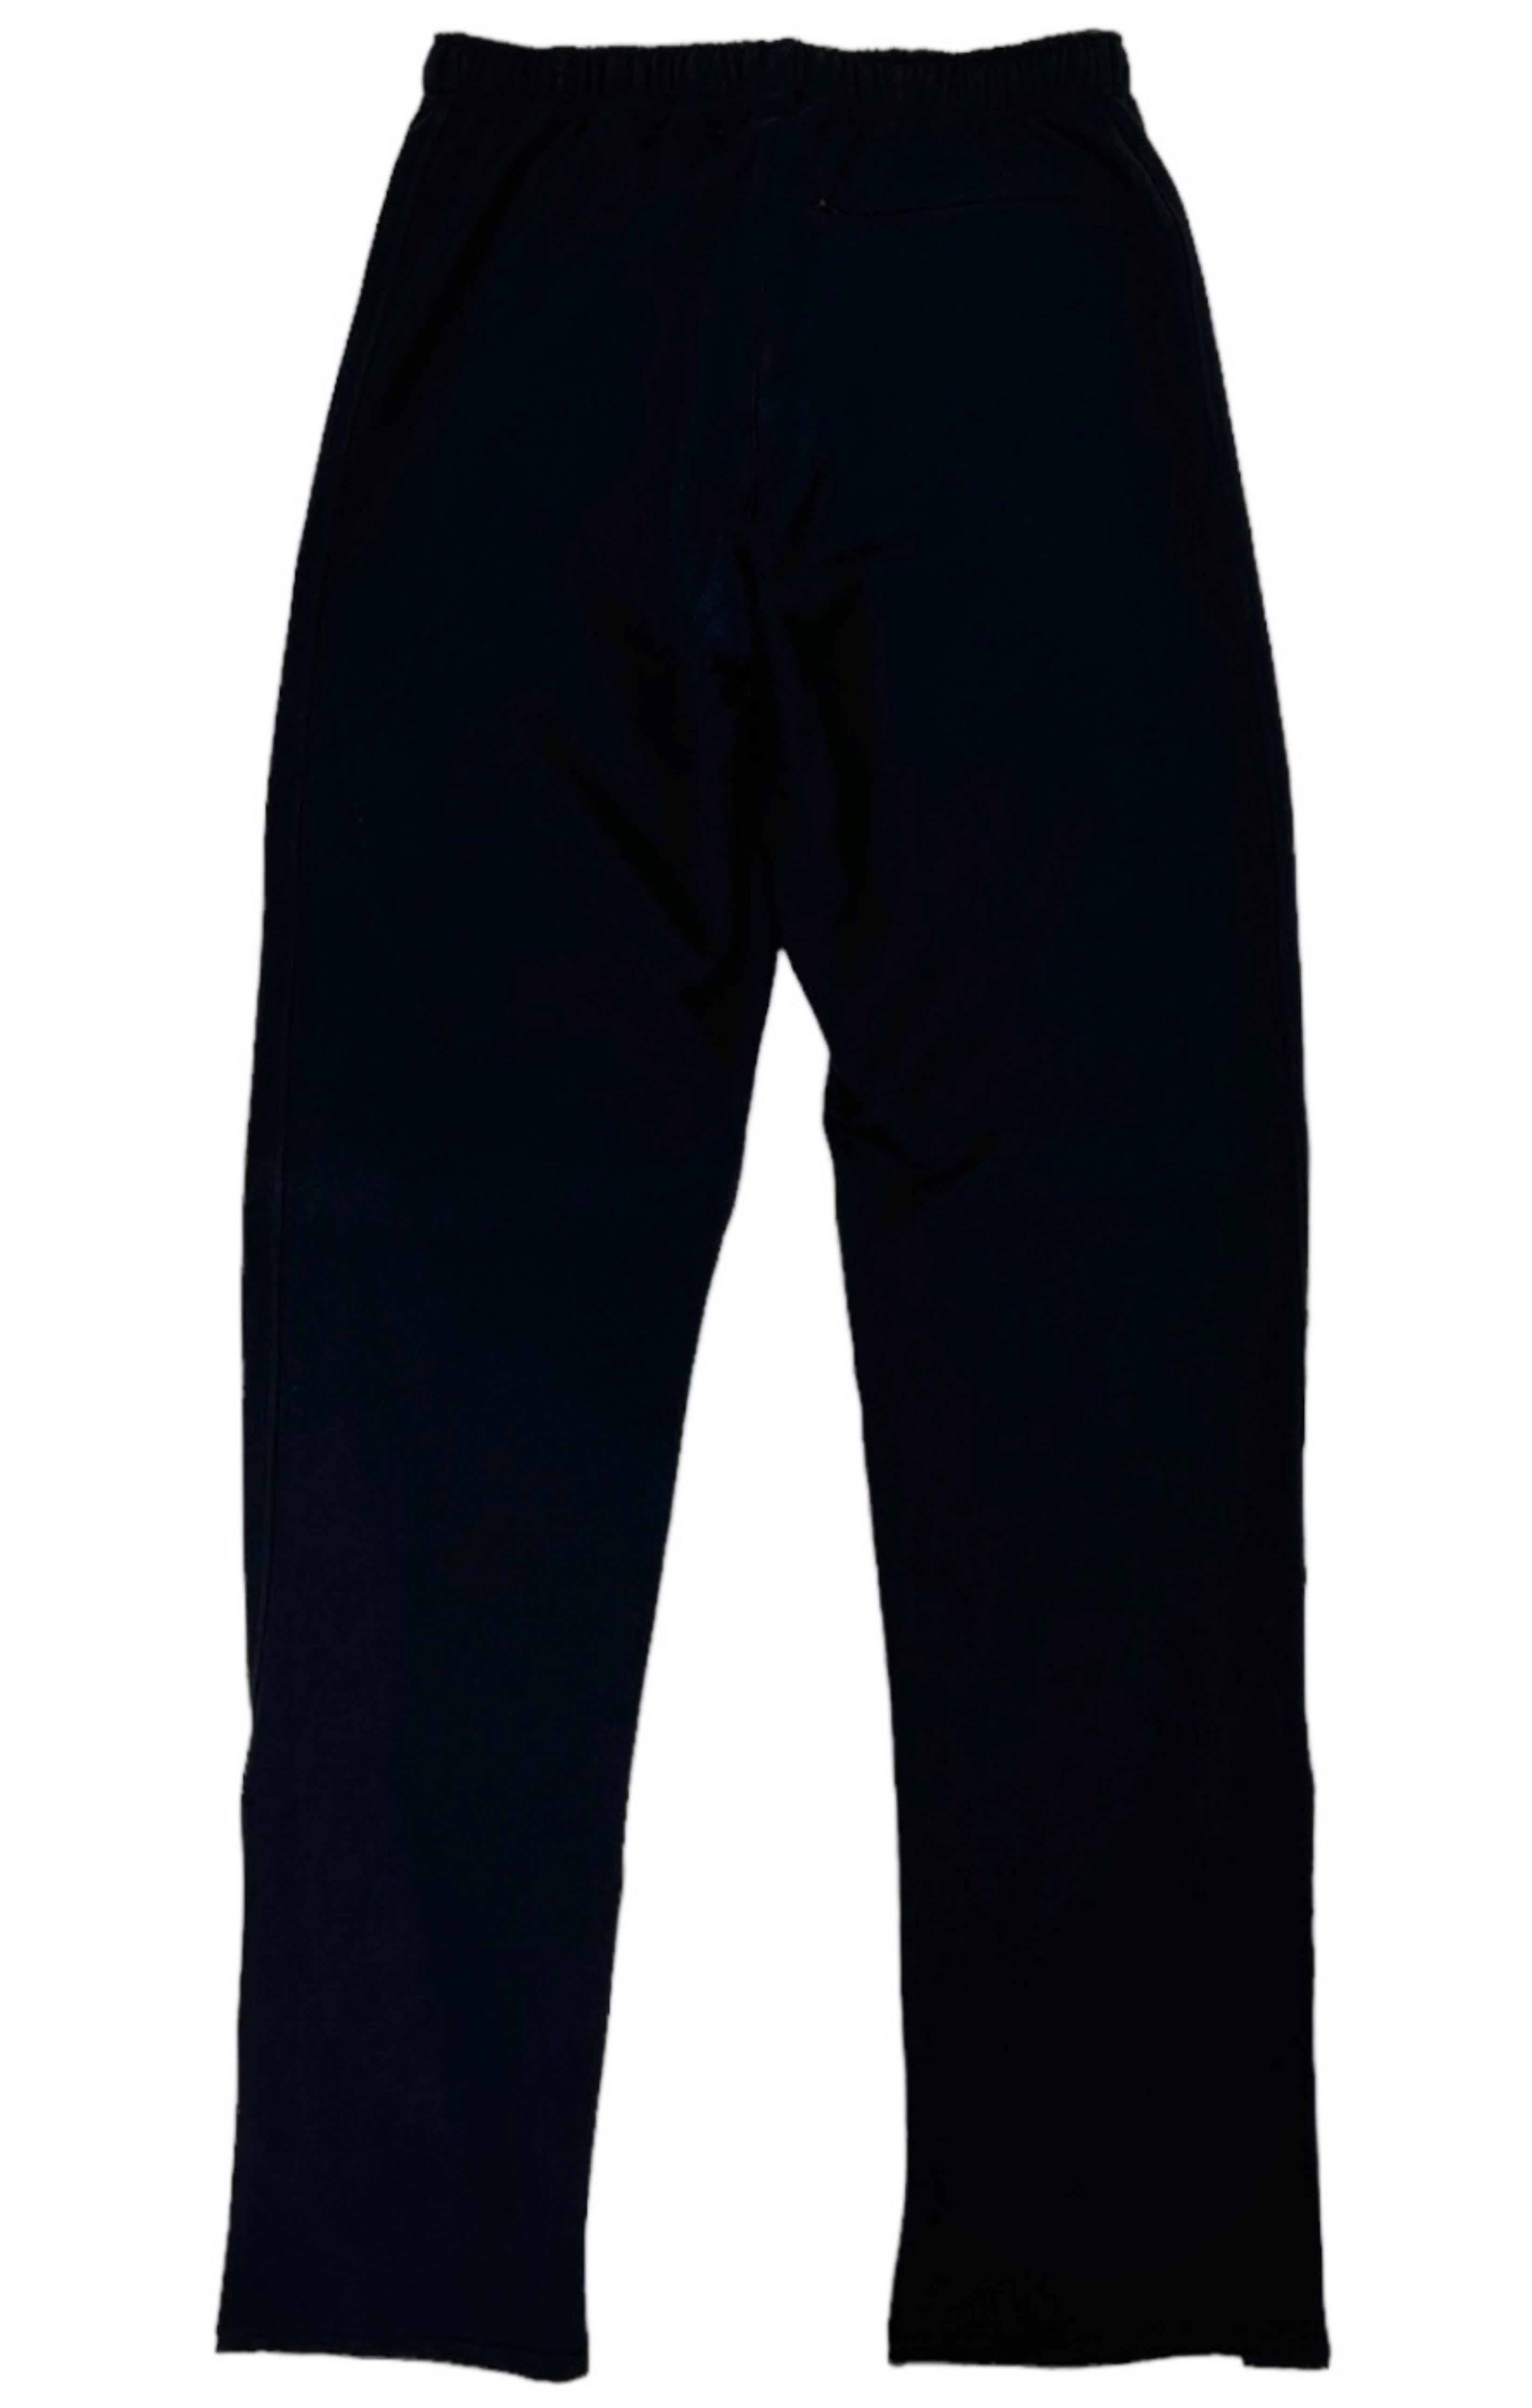 WARAIRE (RARE) Sweatpants Size: No size tags, fit like 2XL